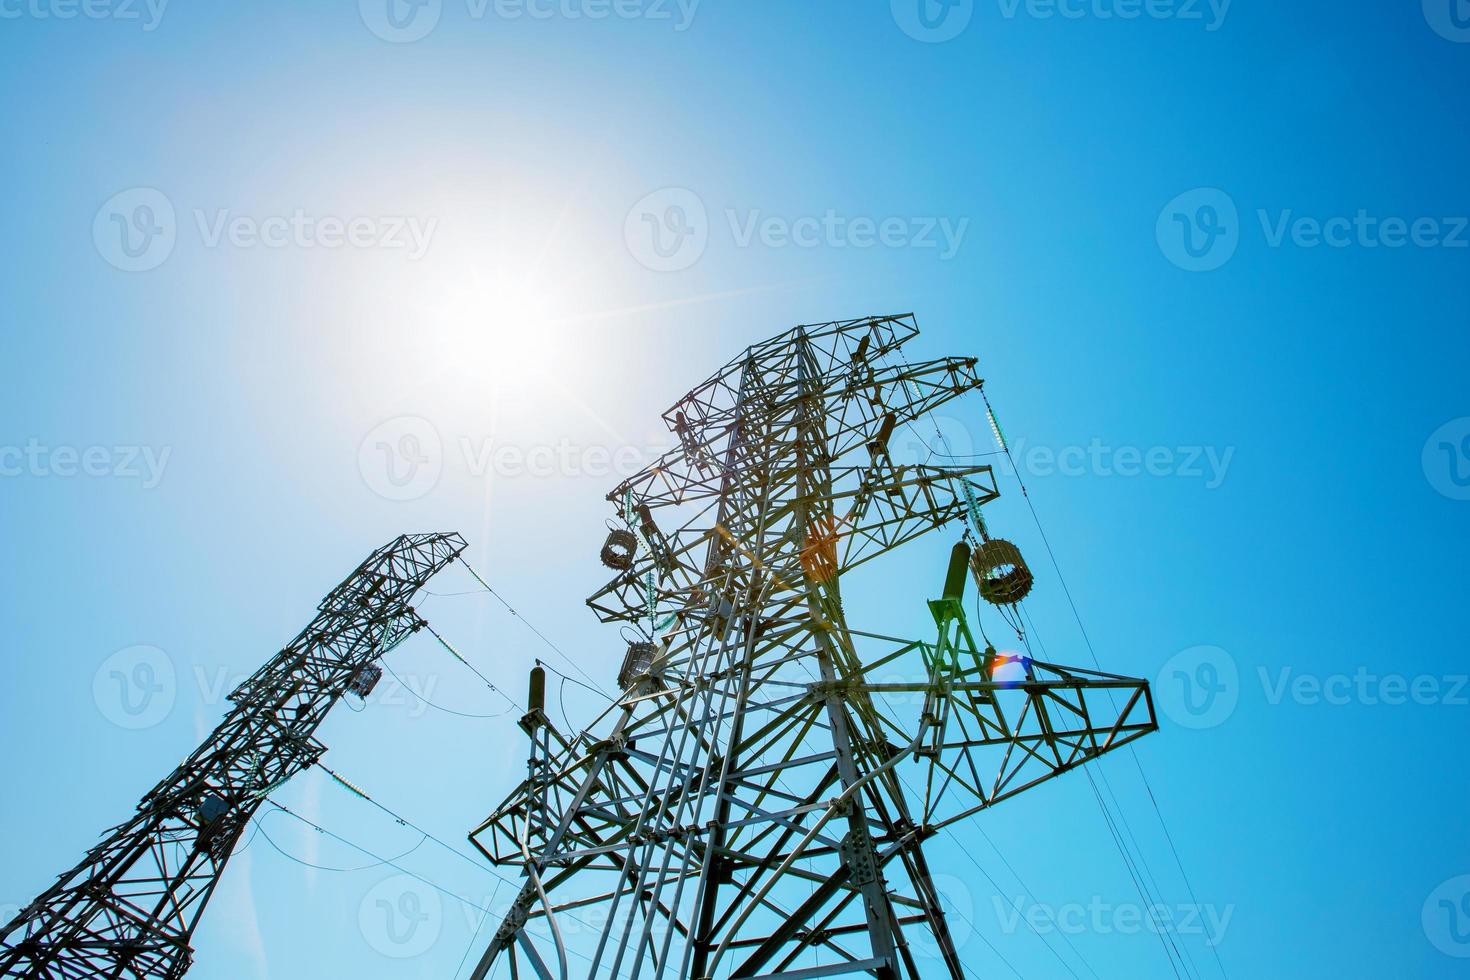 macht toren in de lucht achtergrond, hoog voltage post of hoog voltage toren in de zonlicht foto